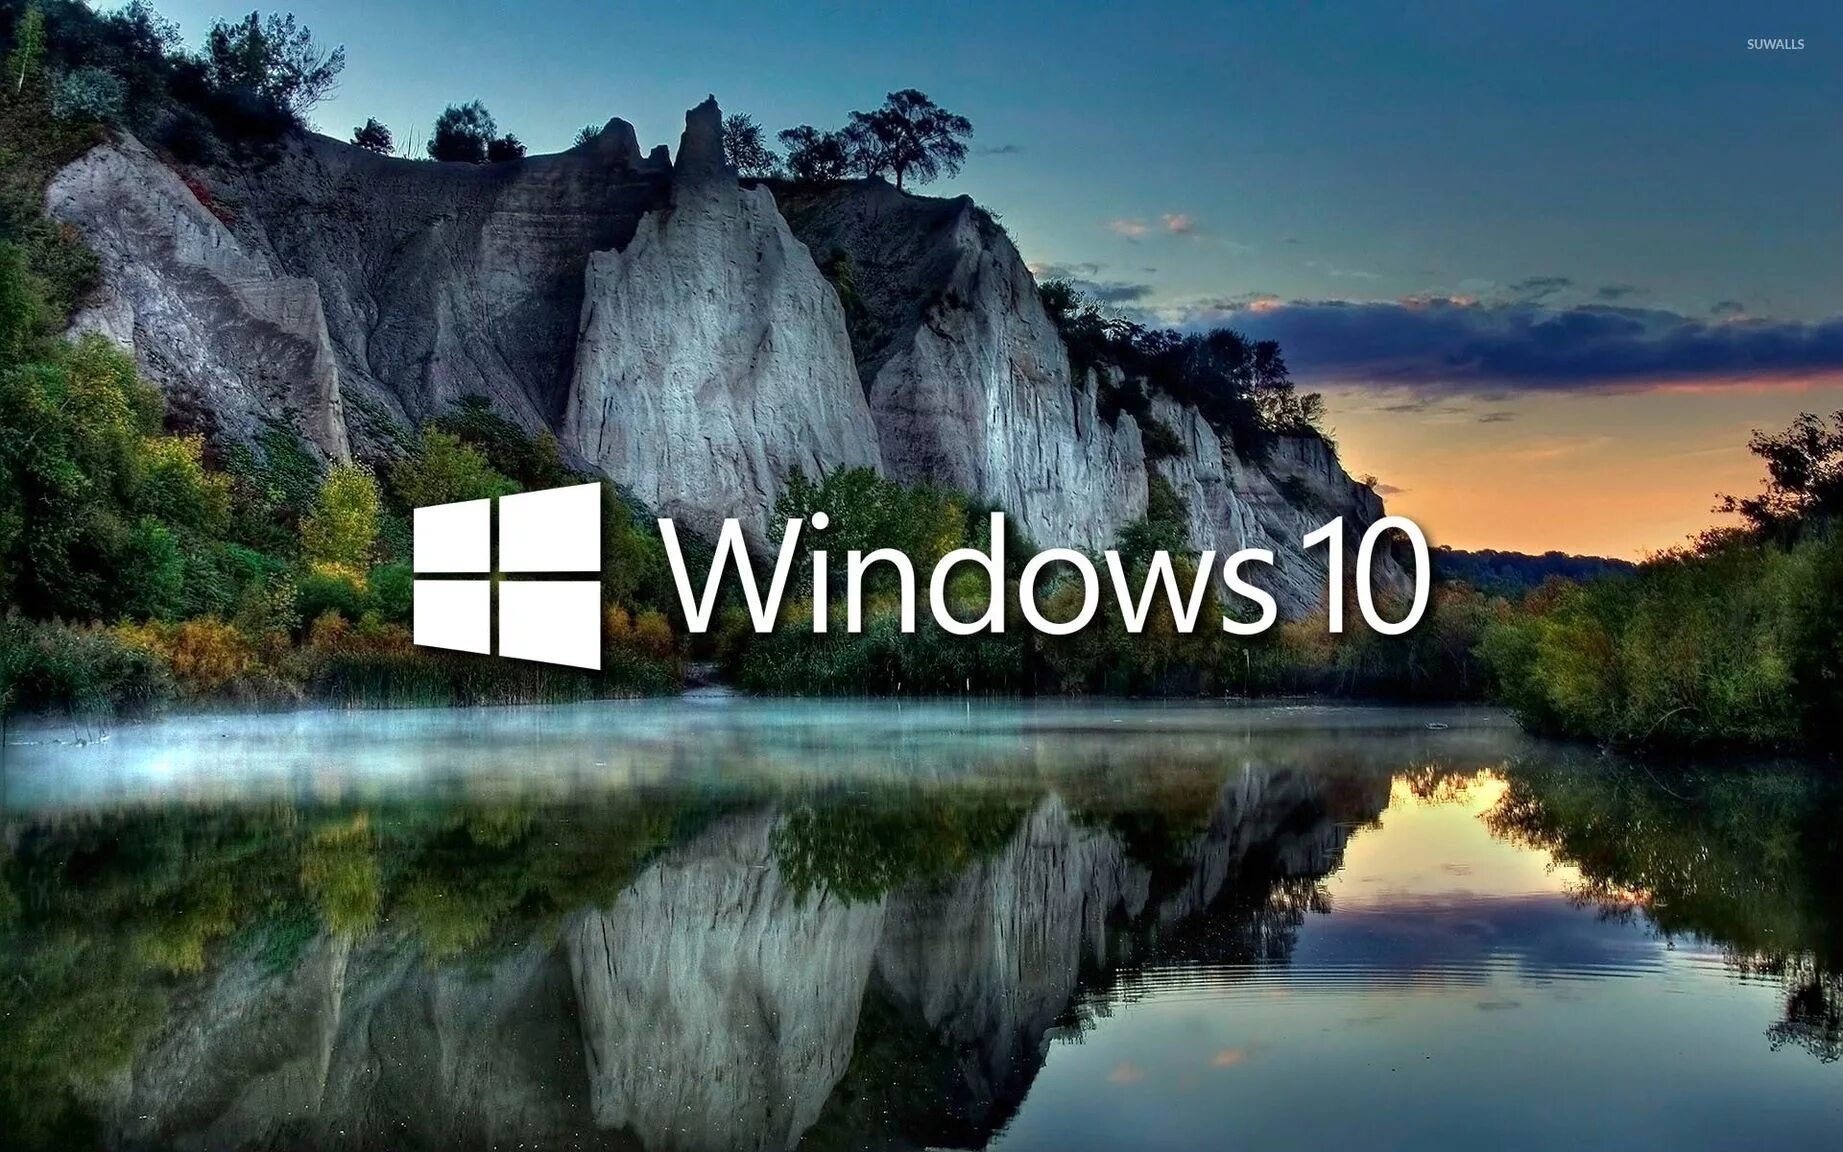 Картинки виндовс 10. Виндовс. Картинки Windows 10. Красивая заставка виндовс. Фоновые рисунки Windows 10.